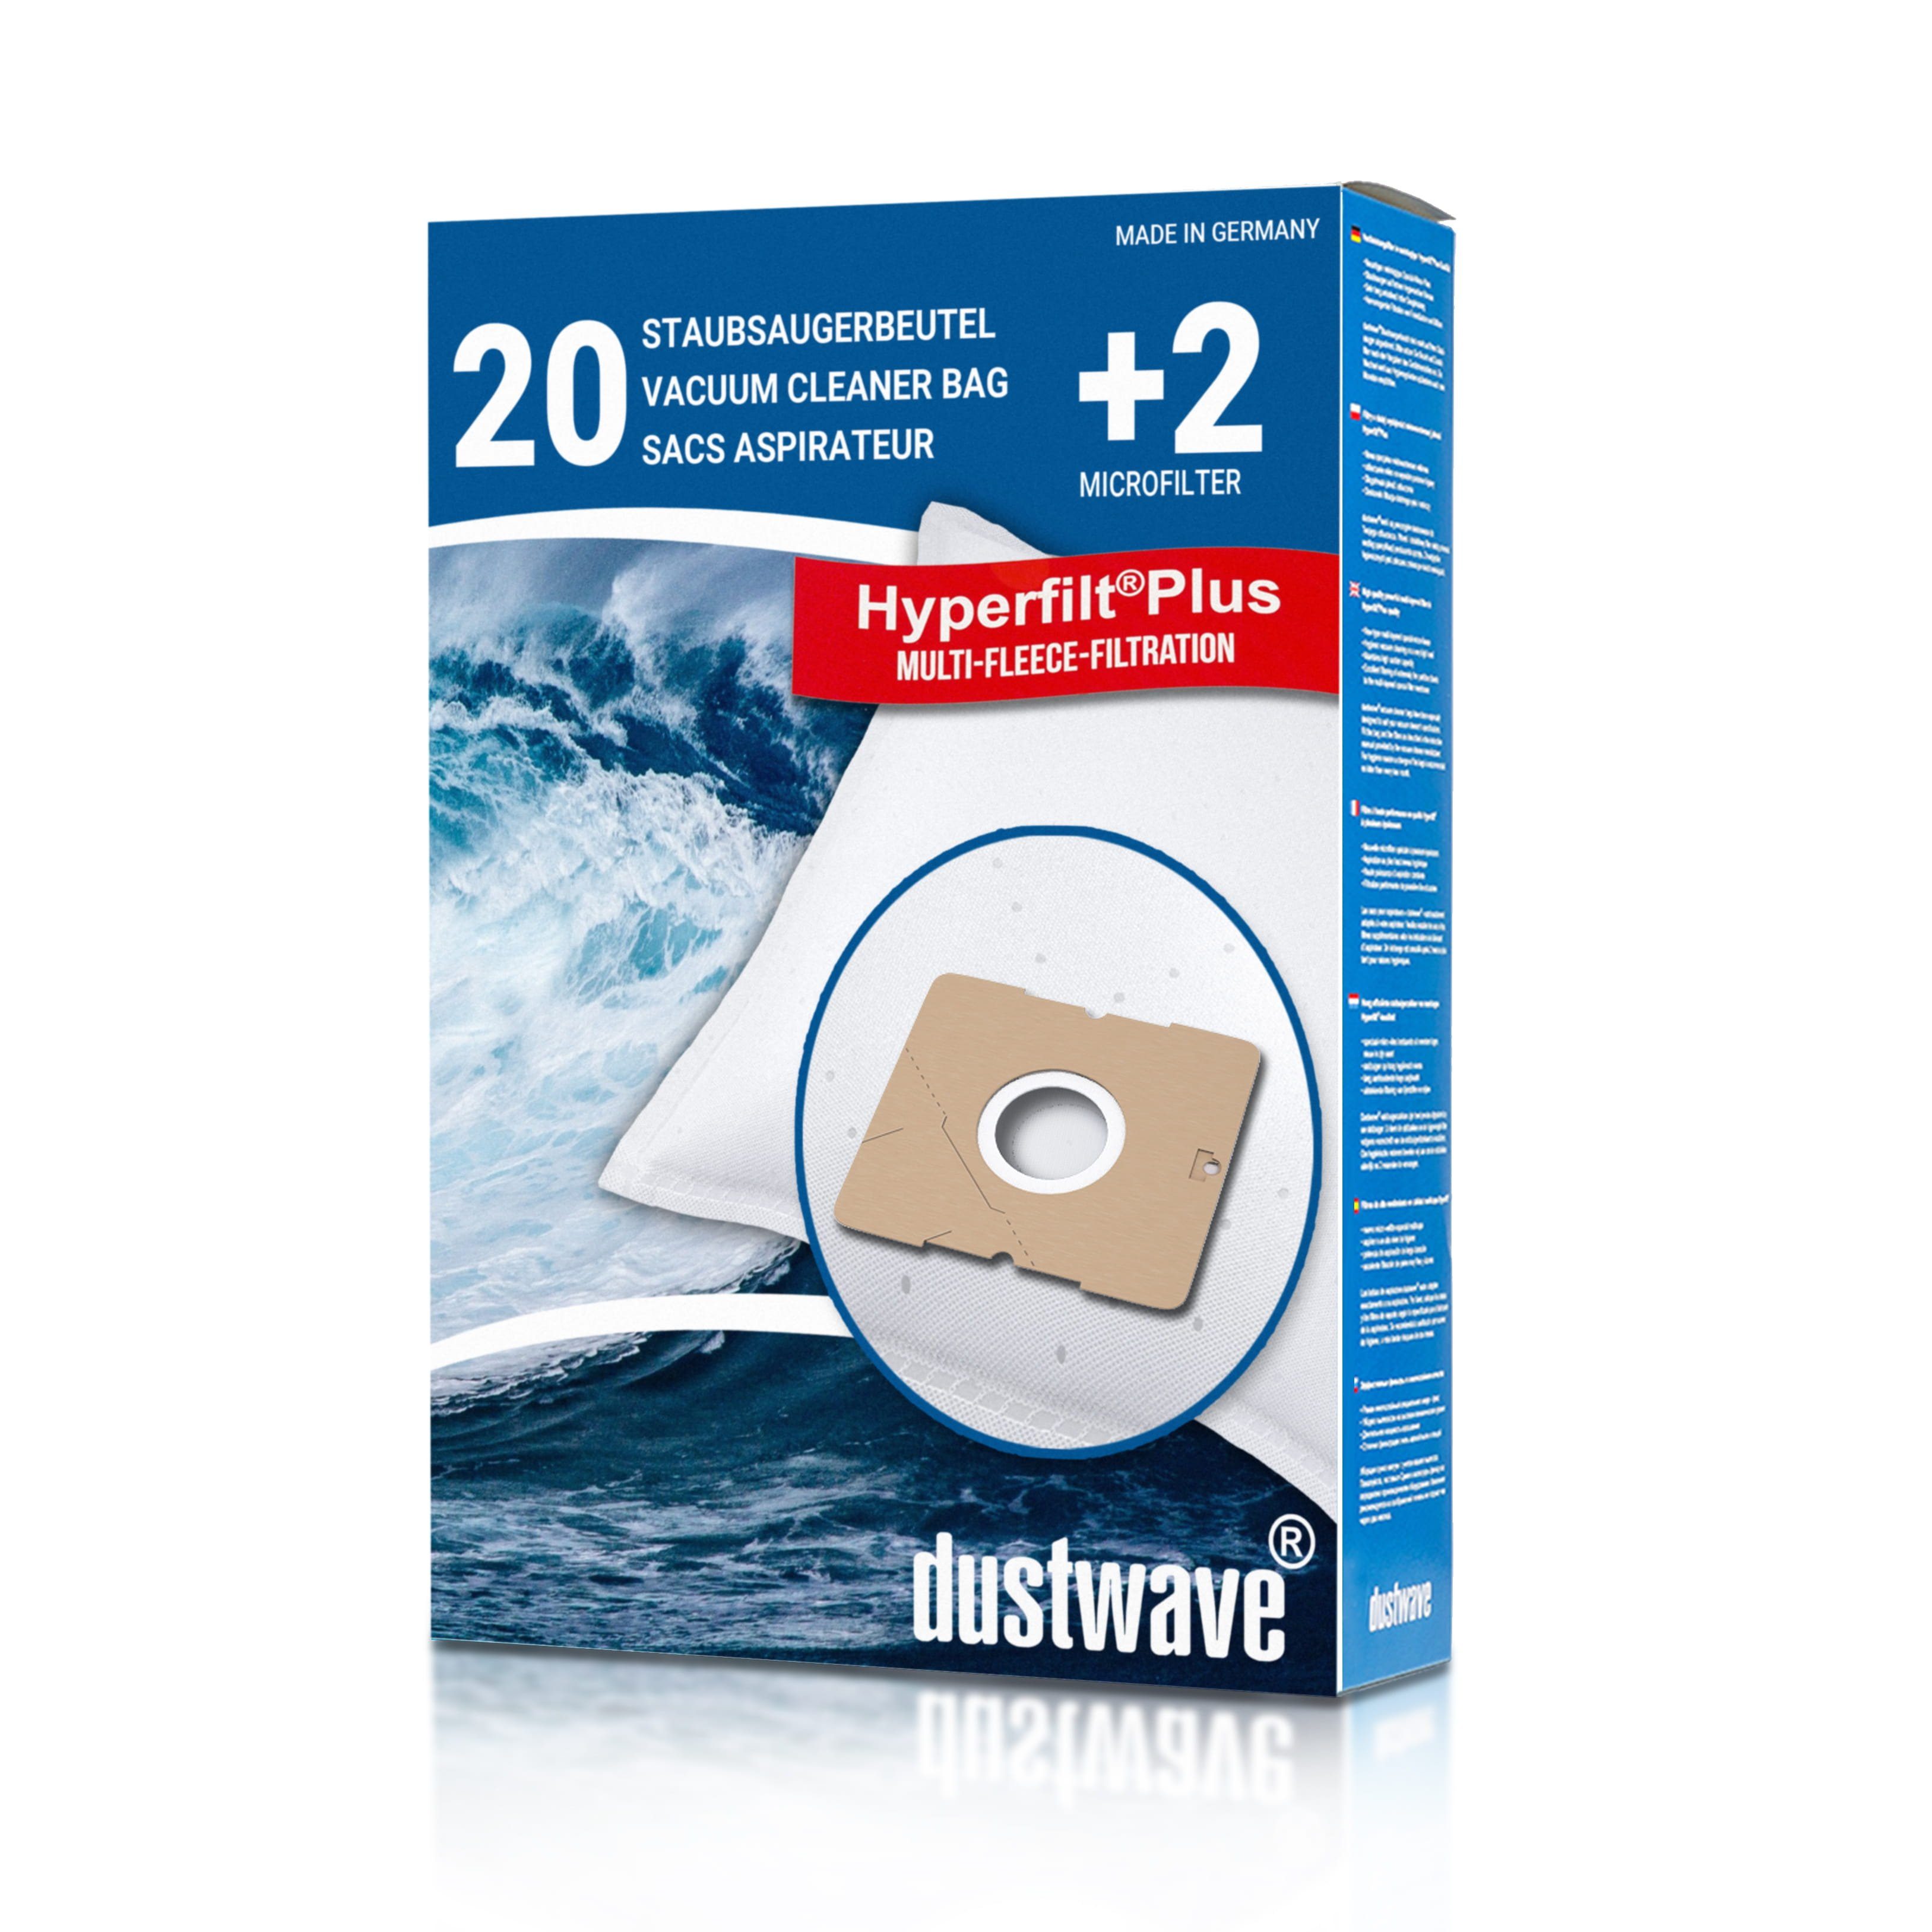 Dustwave Staubsaugerbeutel Megapack, passend für AmazonBasics 1,5l, 20 St., Megapack, 20 Staubsaugerbeutel + 2 Hepa-Filter (ca. 15x15cm - zuschneidbar)